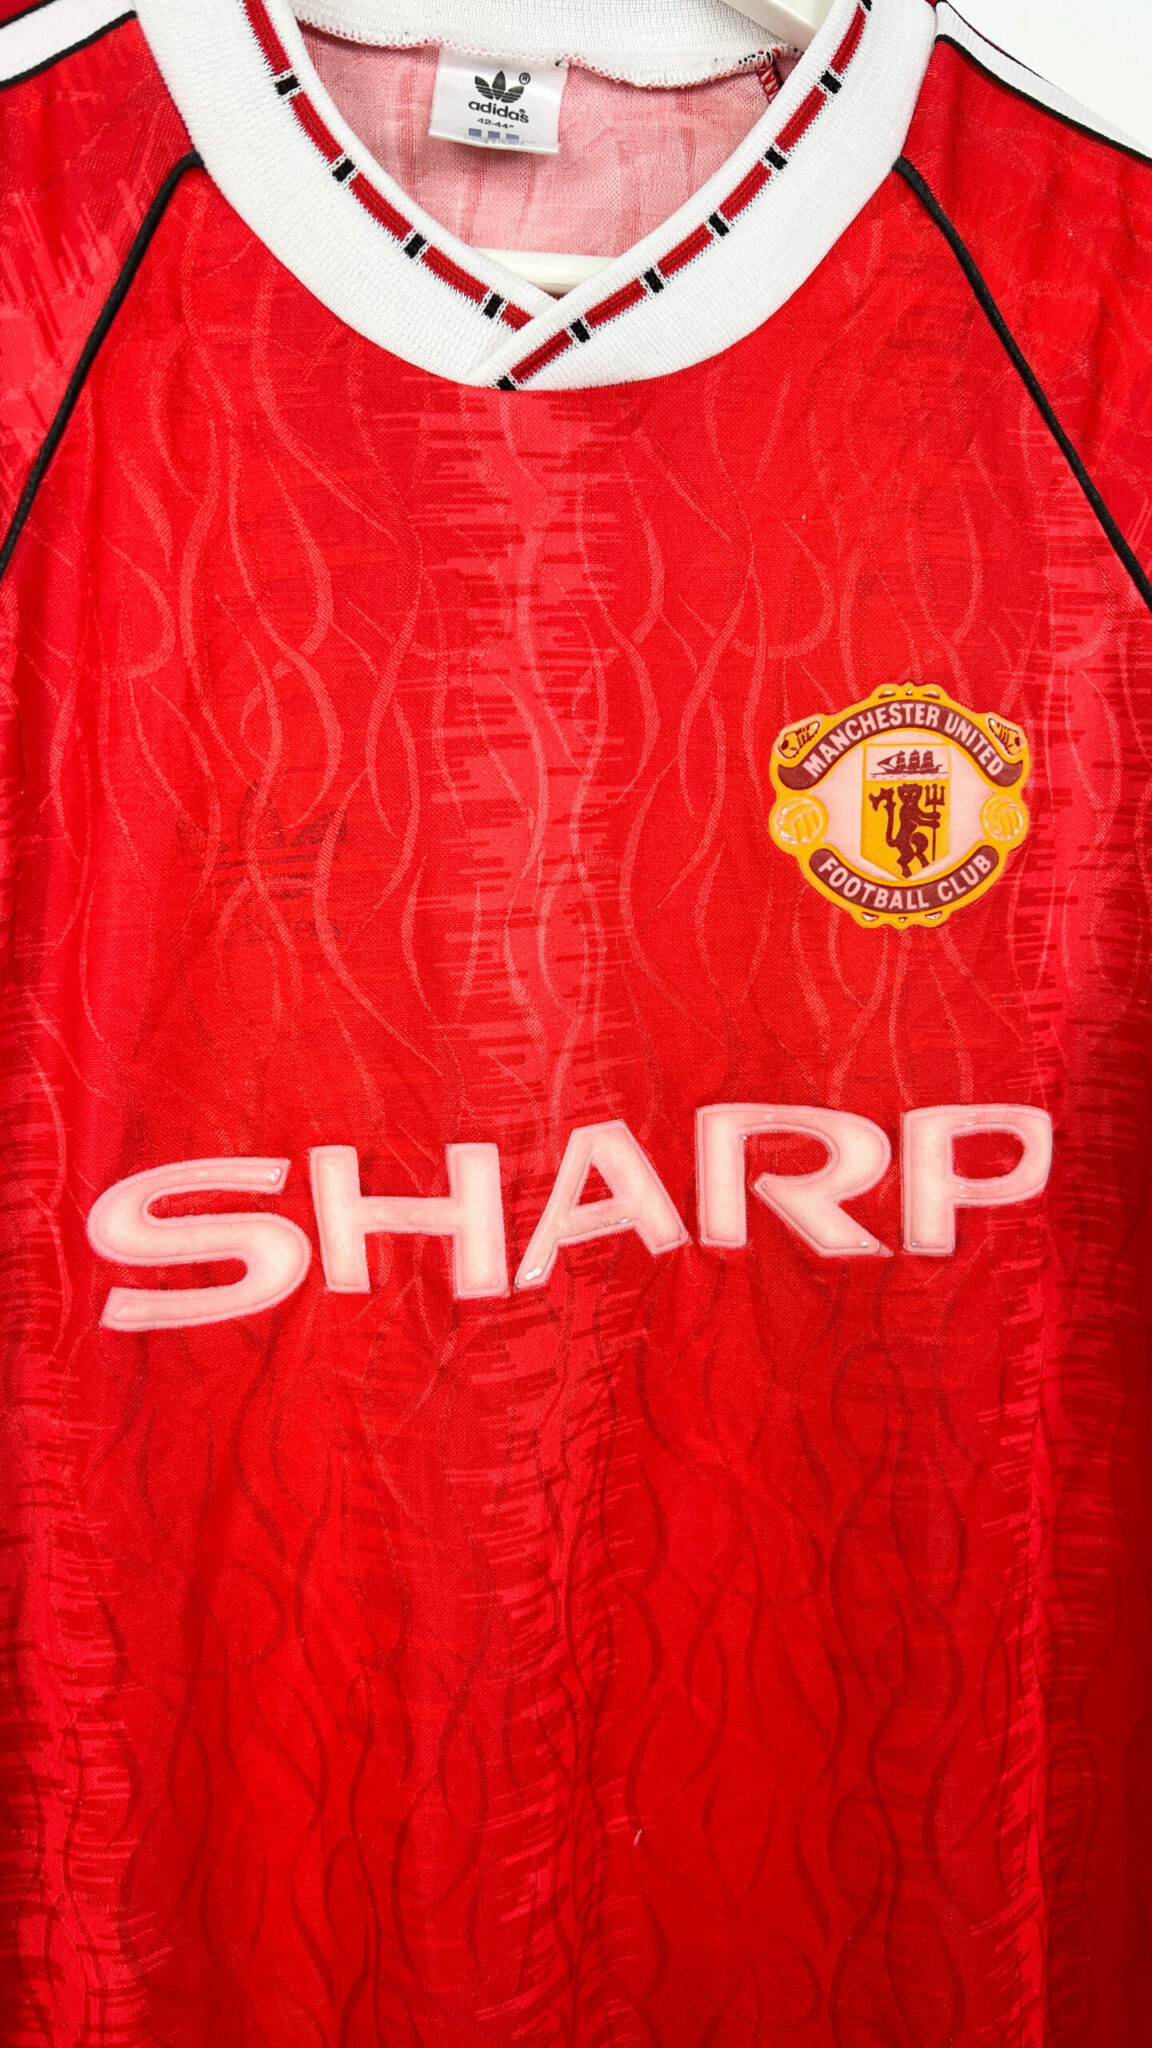 1990/91 Man Utd Home Football Shirt / Old Classic Adidas Soccer Jersey